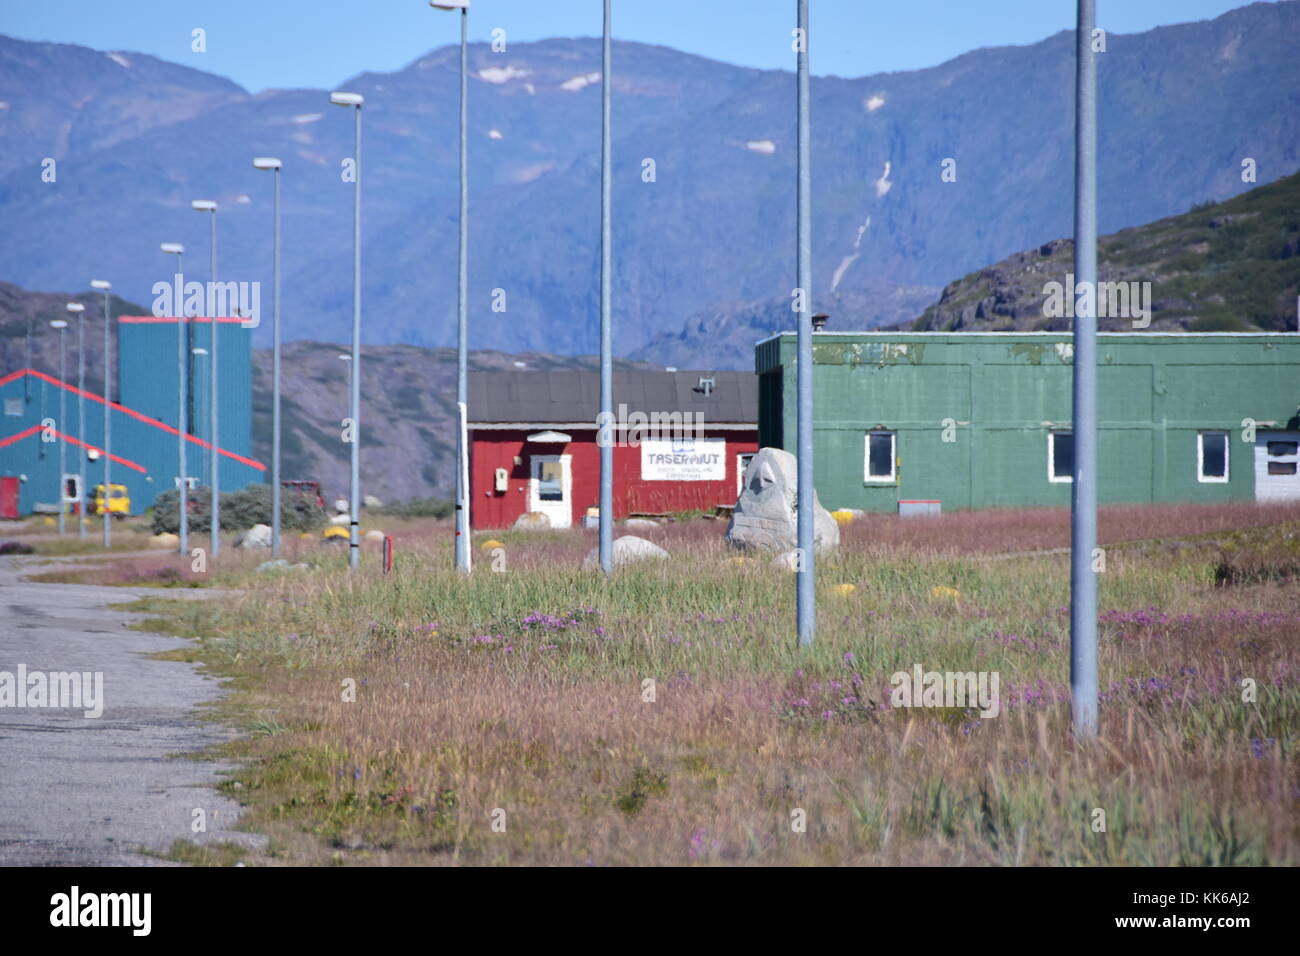 Street view / scena. Narsarsuaq, Groenlandia. Agosto 2017 Foto Stock